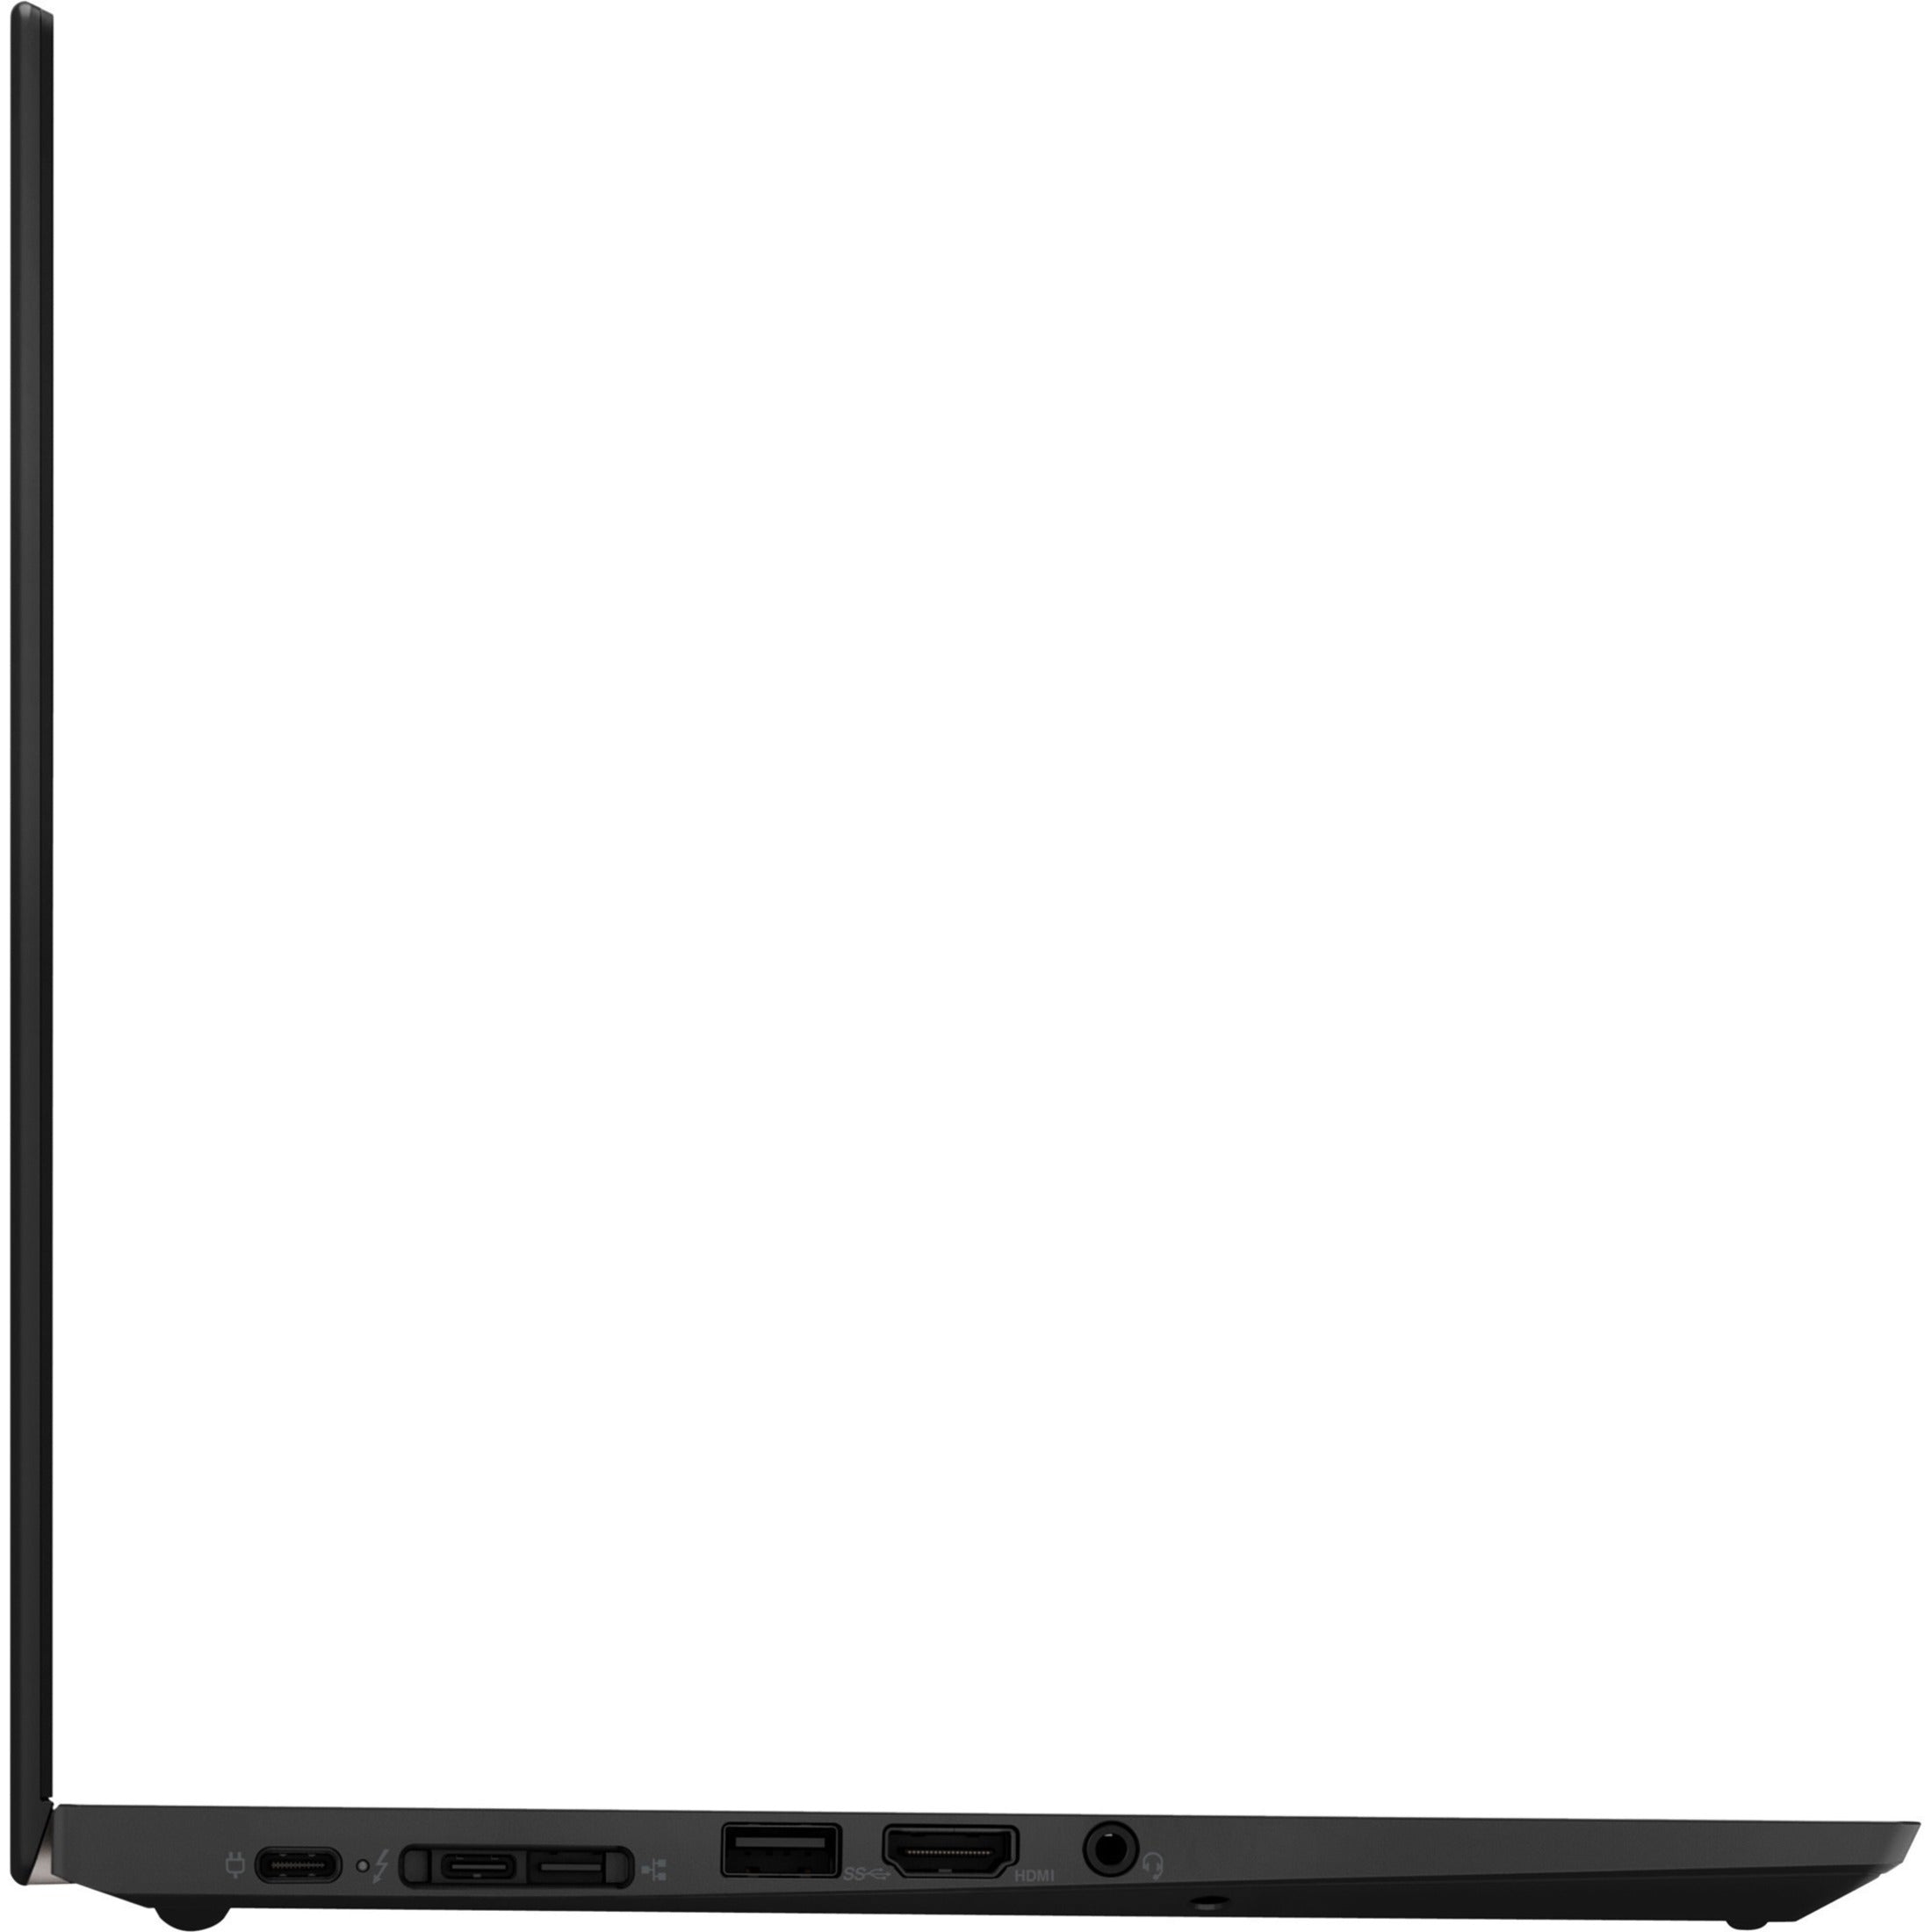 Lenovo ThinkPad X13 Gen 1 13.3" Notebook i5-10310U 16GB DDR4 512GB SSD Touchscreen Win10 Pro  - Grade A